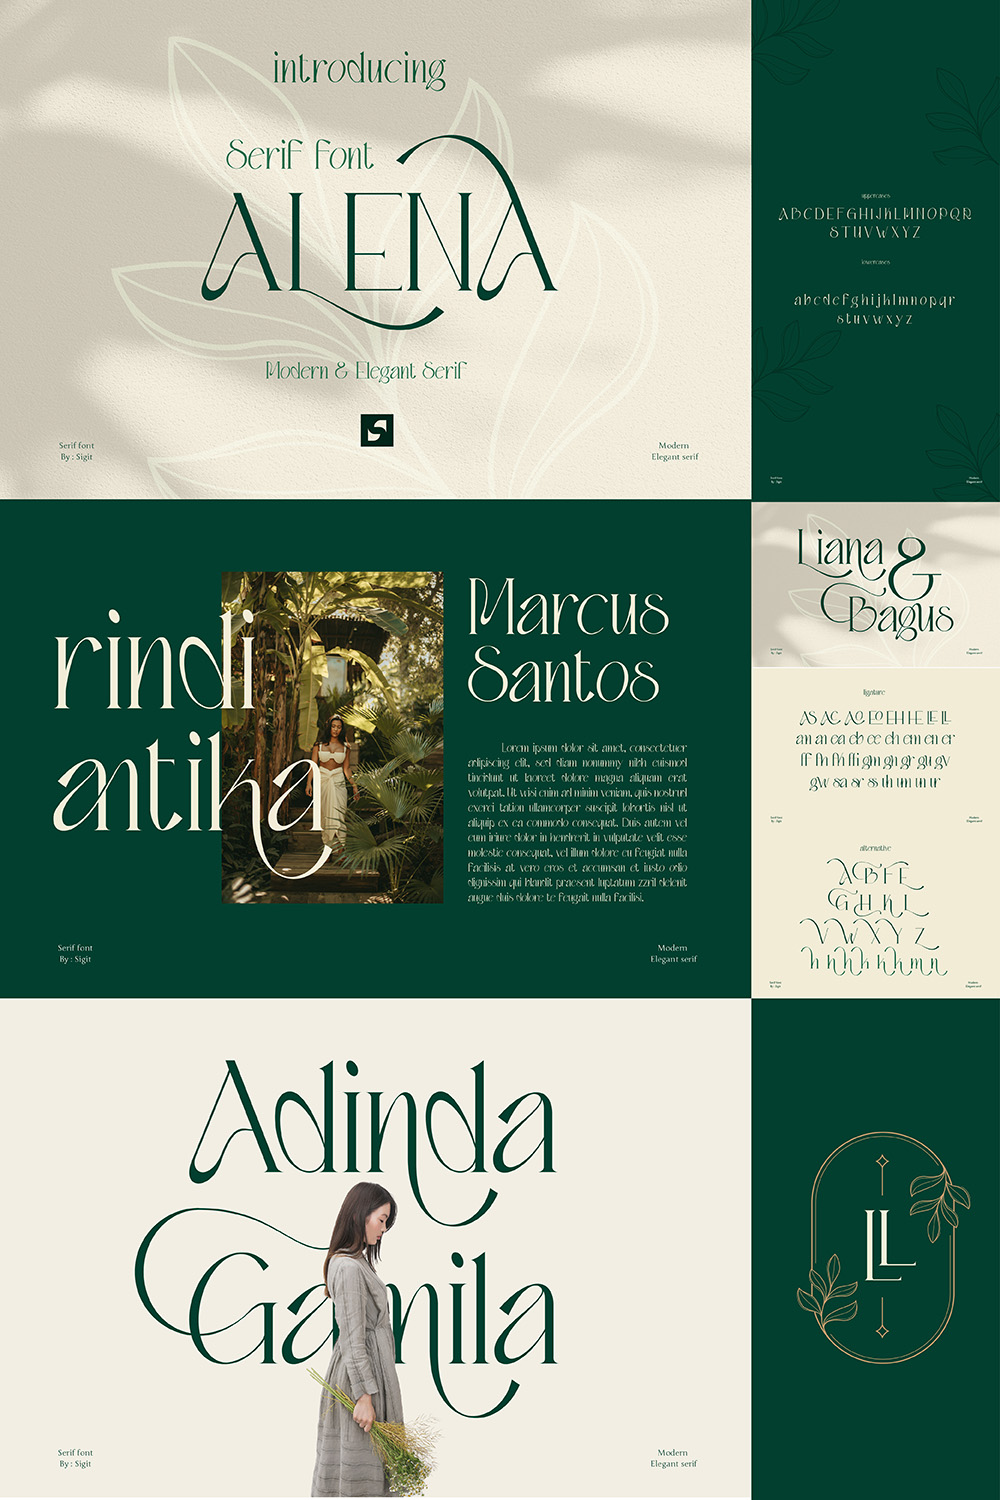 Alena Serif Font Pinterest Collage Image.